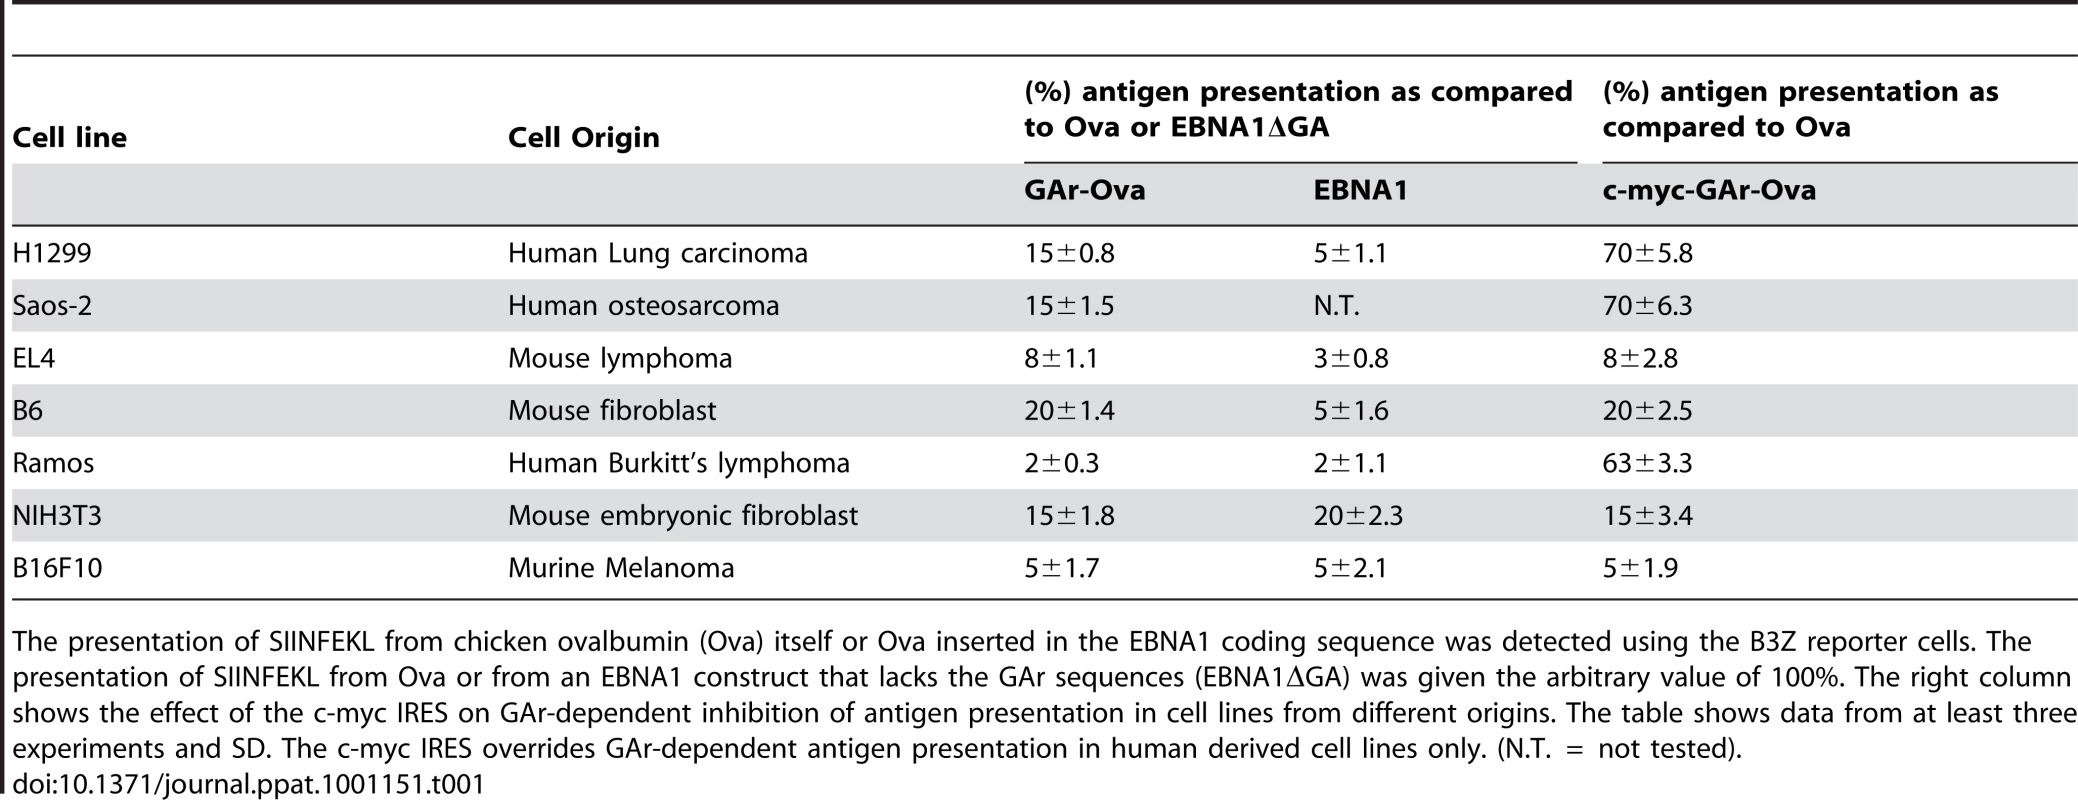 GAr-dependent inhibition of antigen presentation in different cell lines from different origins.